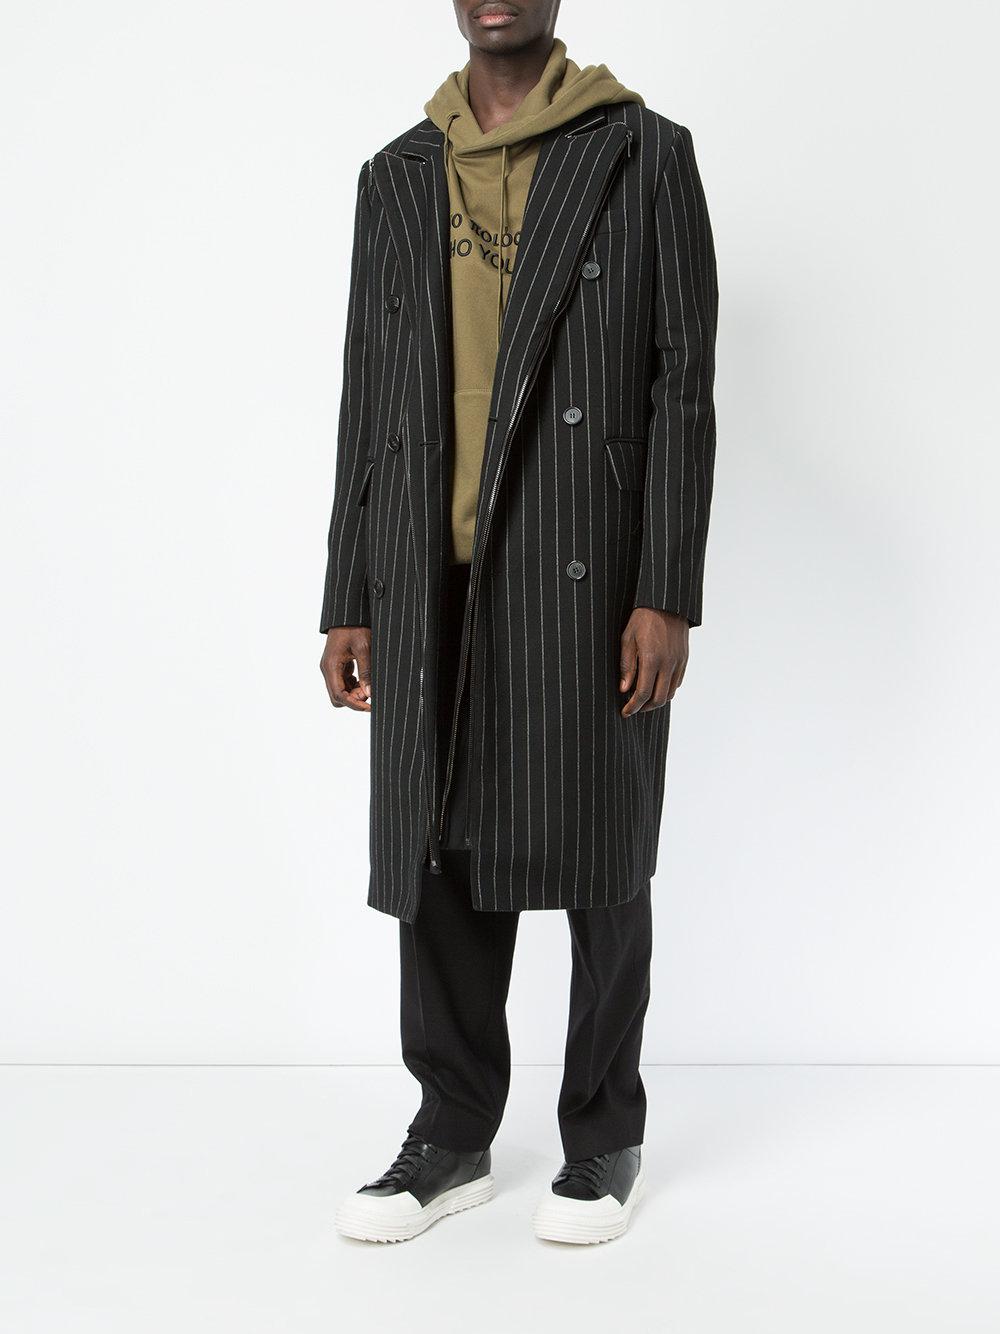 Juun.J Wool Pinstripe Coat in Black for Men - Lyst